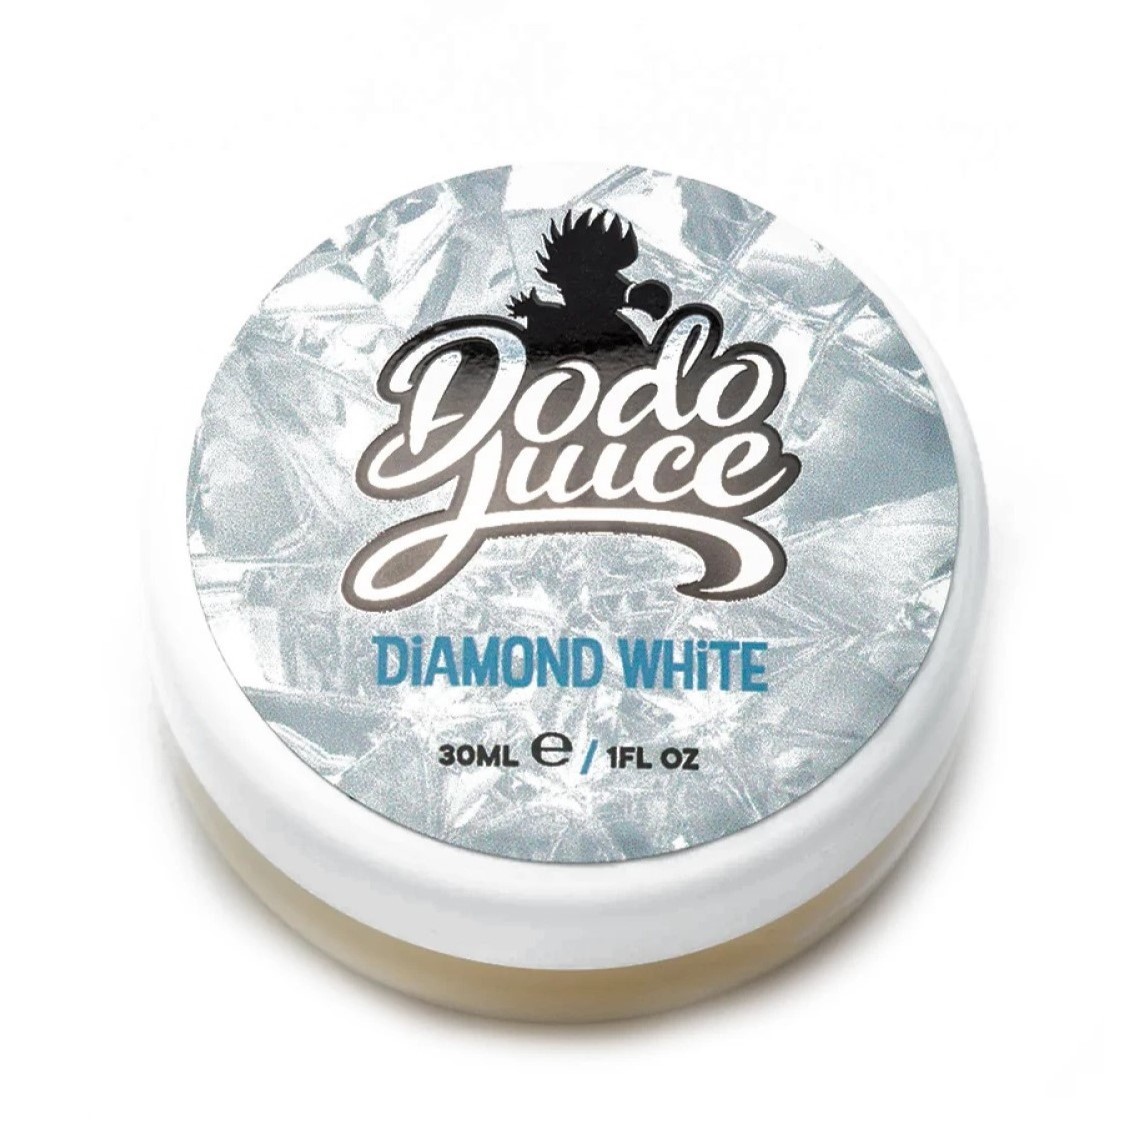 Dodo Juice Diamond White Hard Wax LIGHT 30ml tvrdý vosk